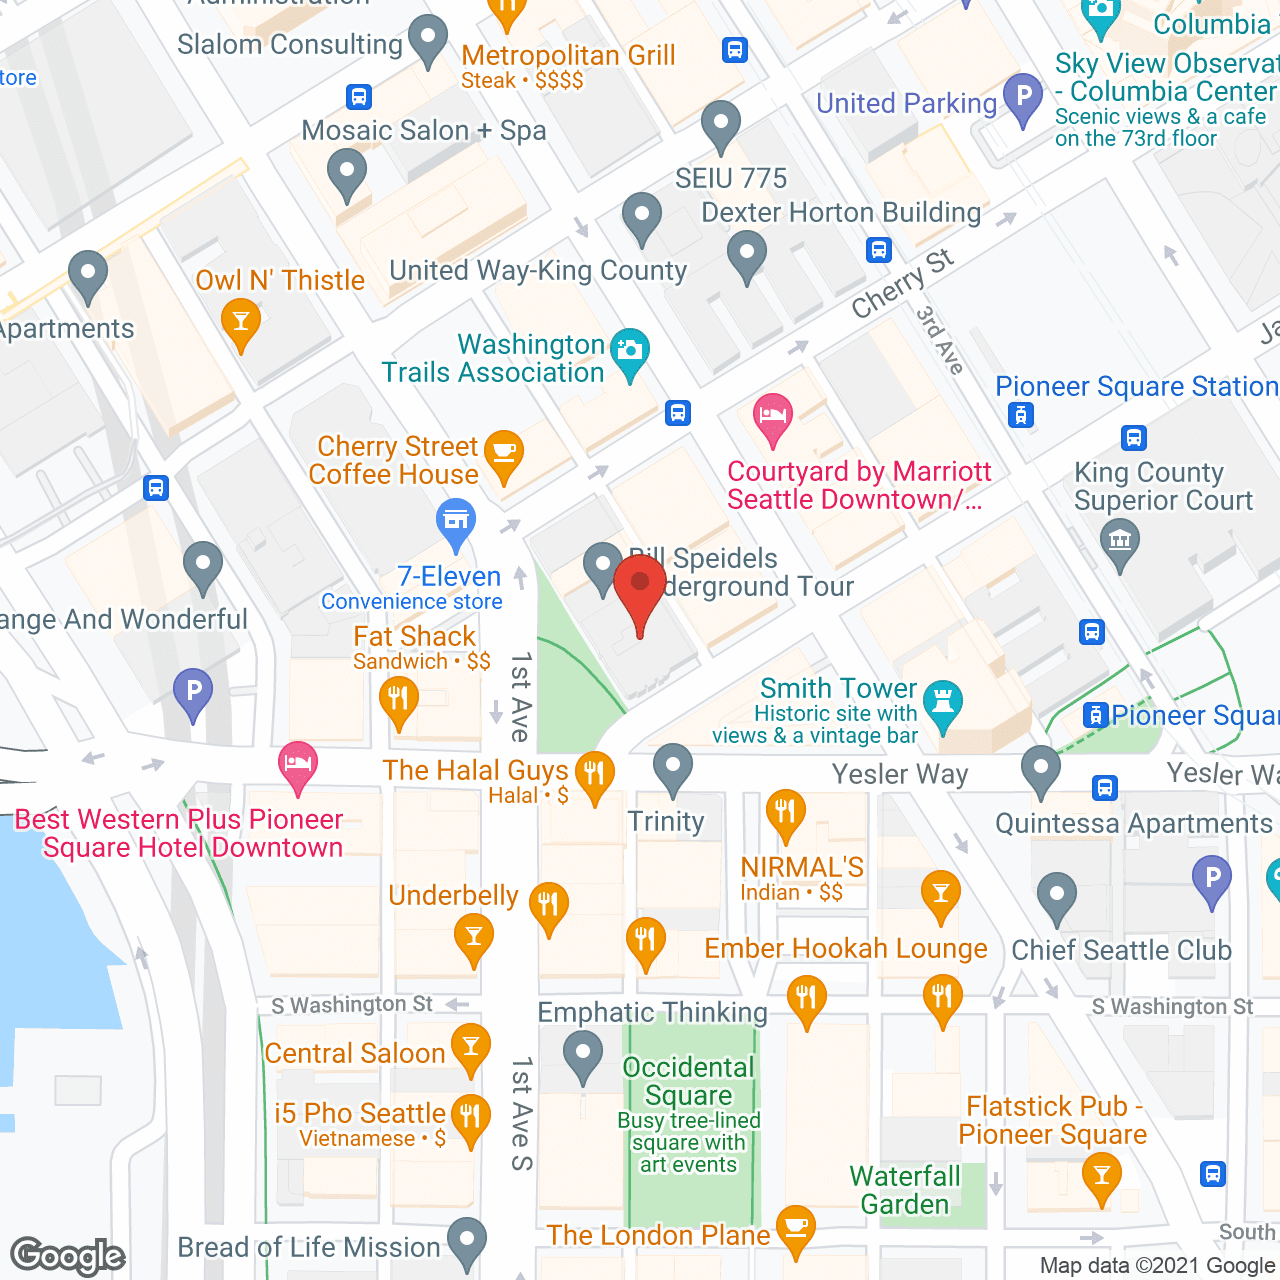 Envoy America Transportation (Seattle Metro Area) in google map